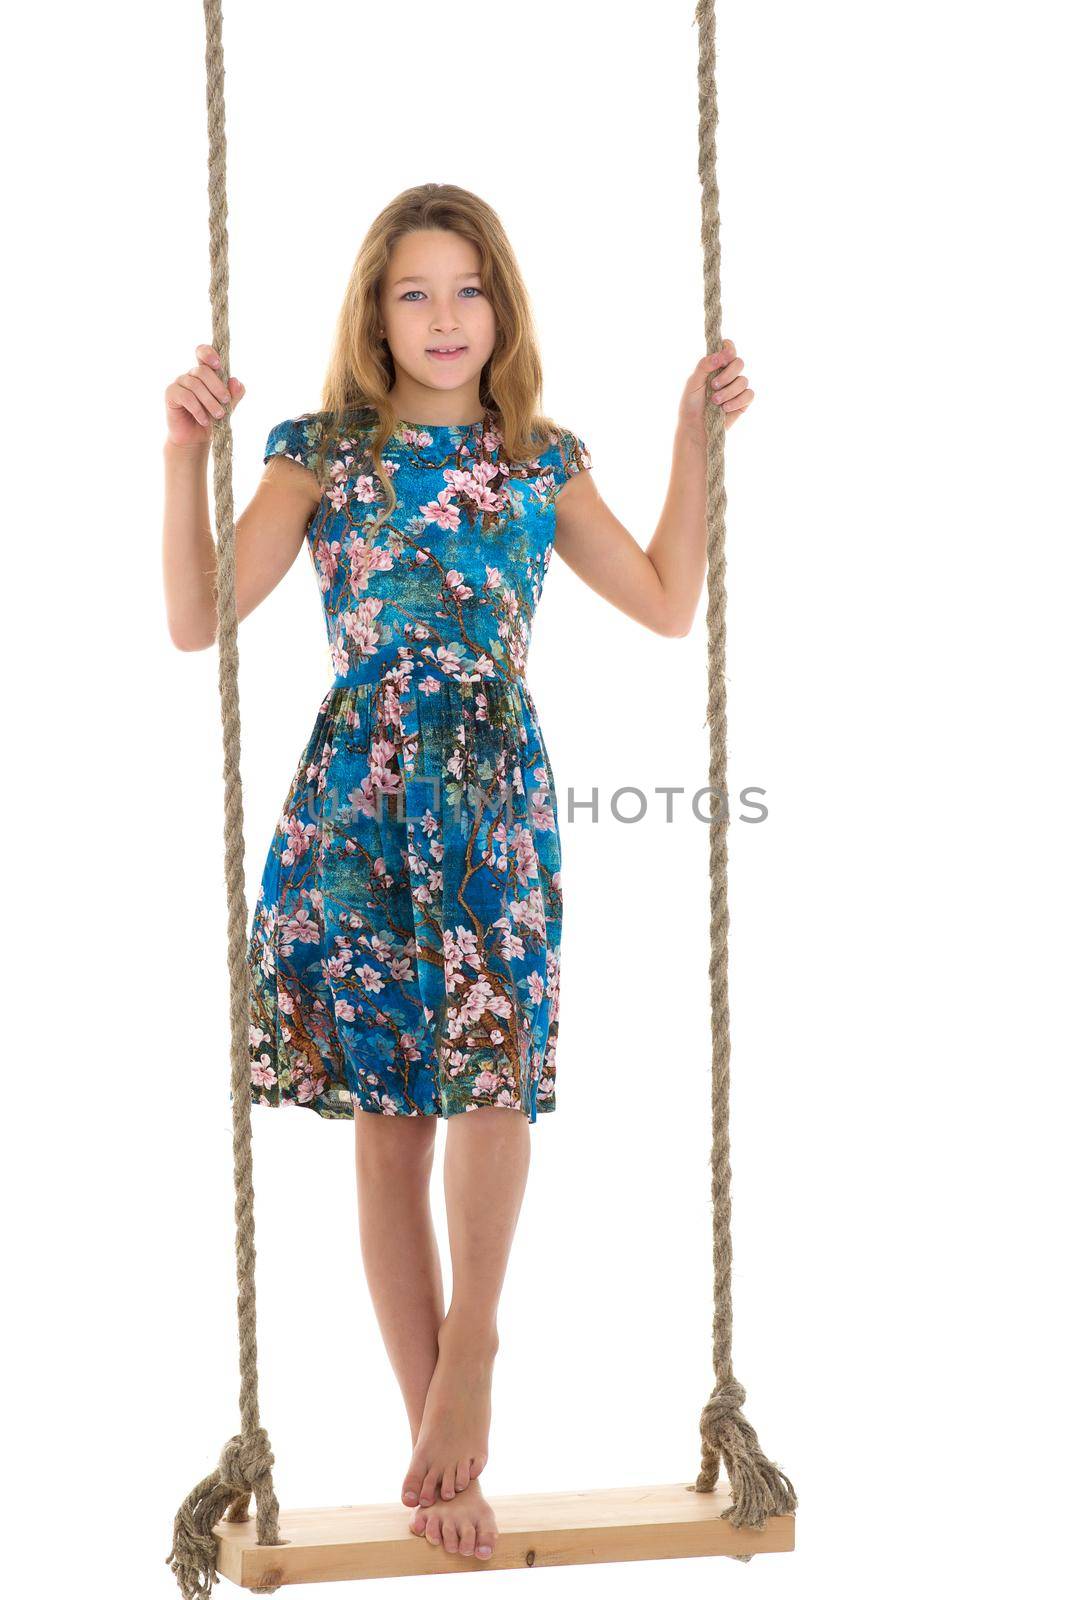 Girl standing on rope swing.Portrait of happy preteen child by kolesnikov_studio